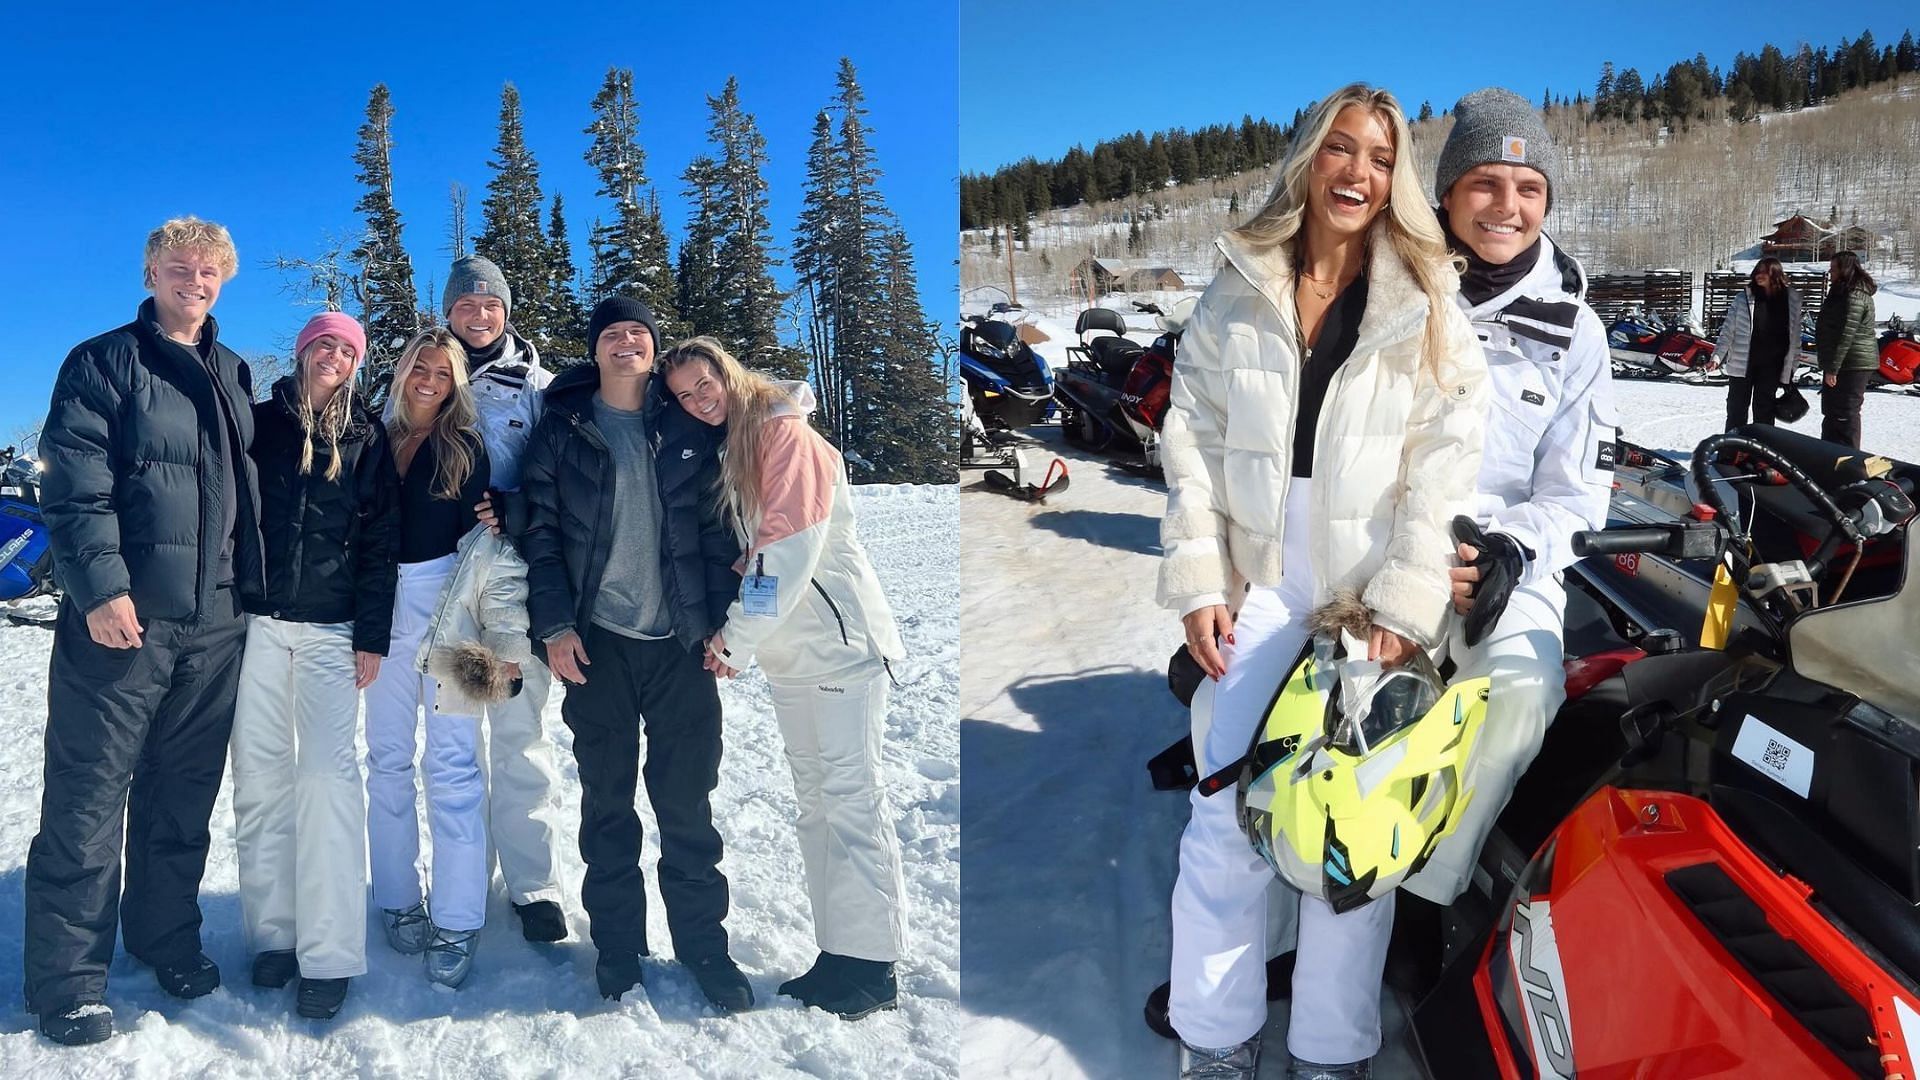 Zach Wilson and Nicolette Dellanno took a vacation in snowy Utah